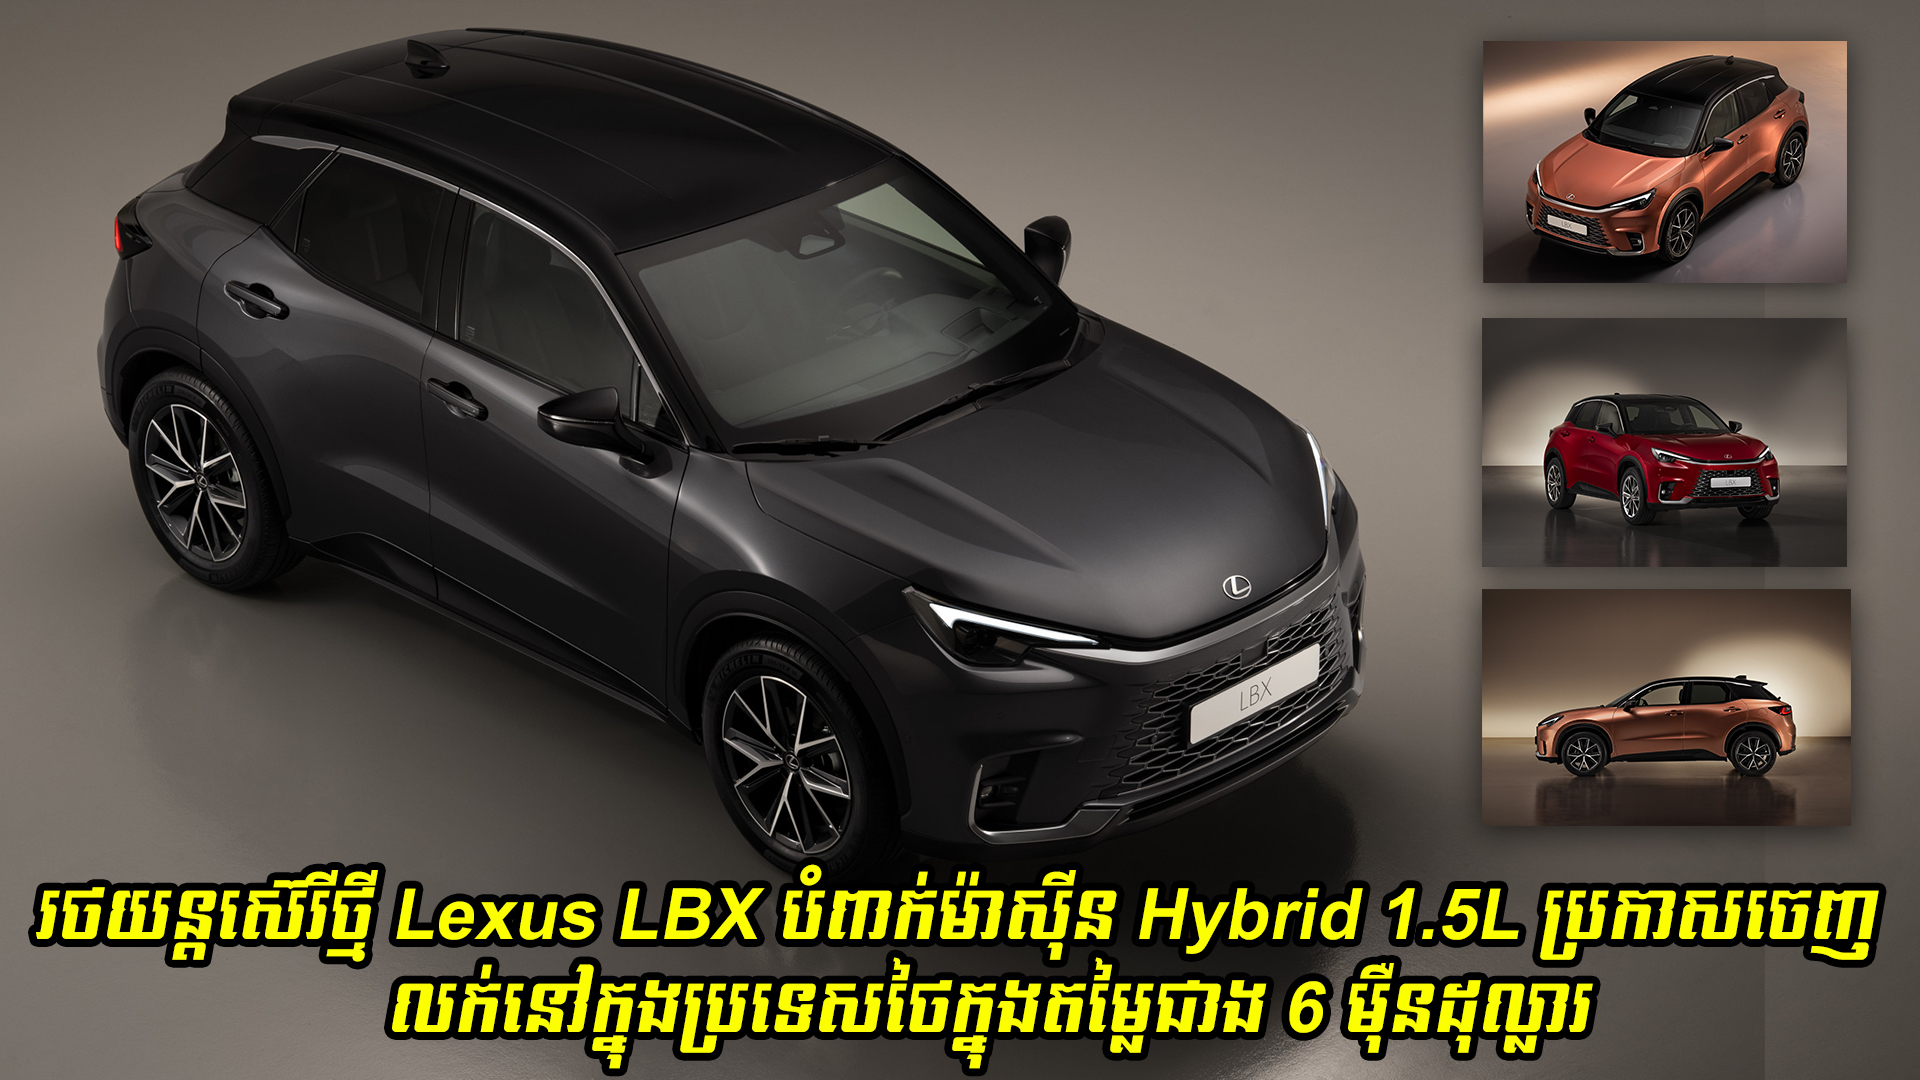 Lexus LBX រថយន្តស៊េរីថ្មីបំពាក់់ម៉ាស៊ីន Hybrid 1.5L បានប្រកាសចេញលក់នៅក្នុងប្រទេសថៃក្នុងតម្លៃខ្ទង់ជាង 6 ម៉ឺនដុល្លារ